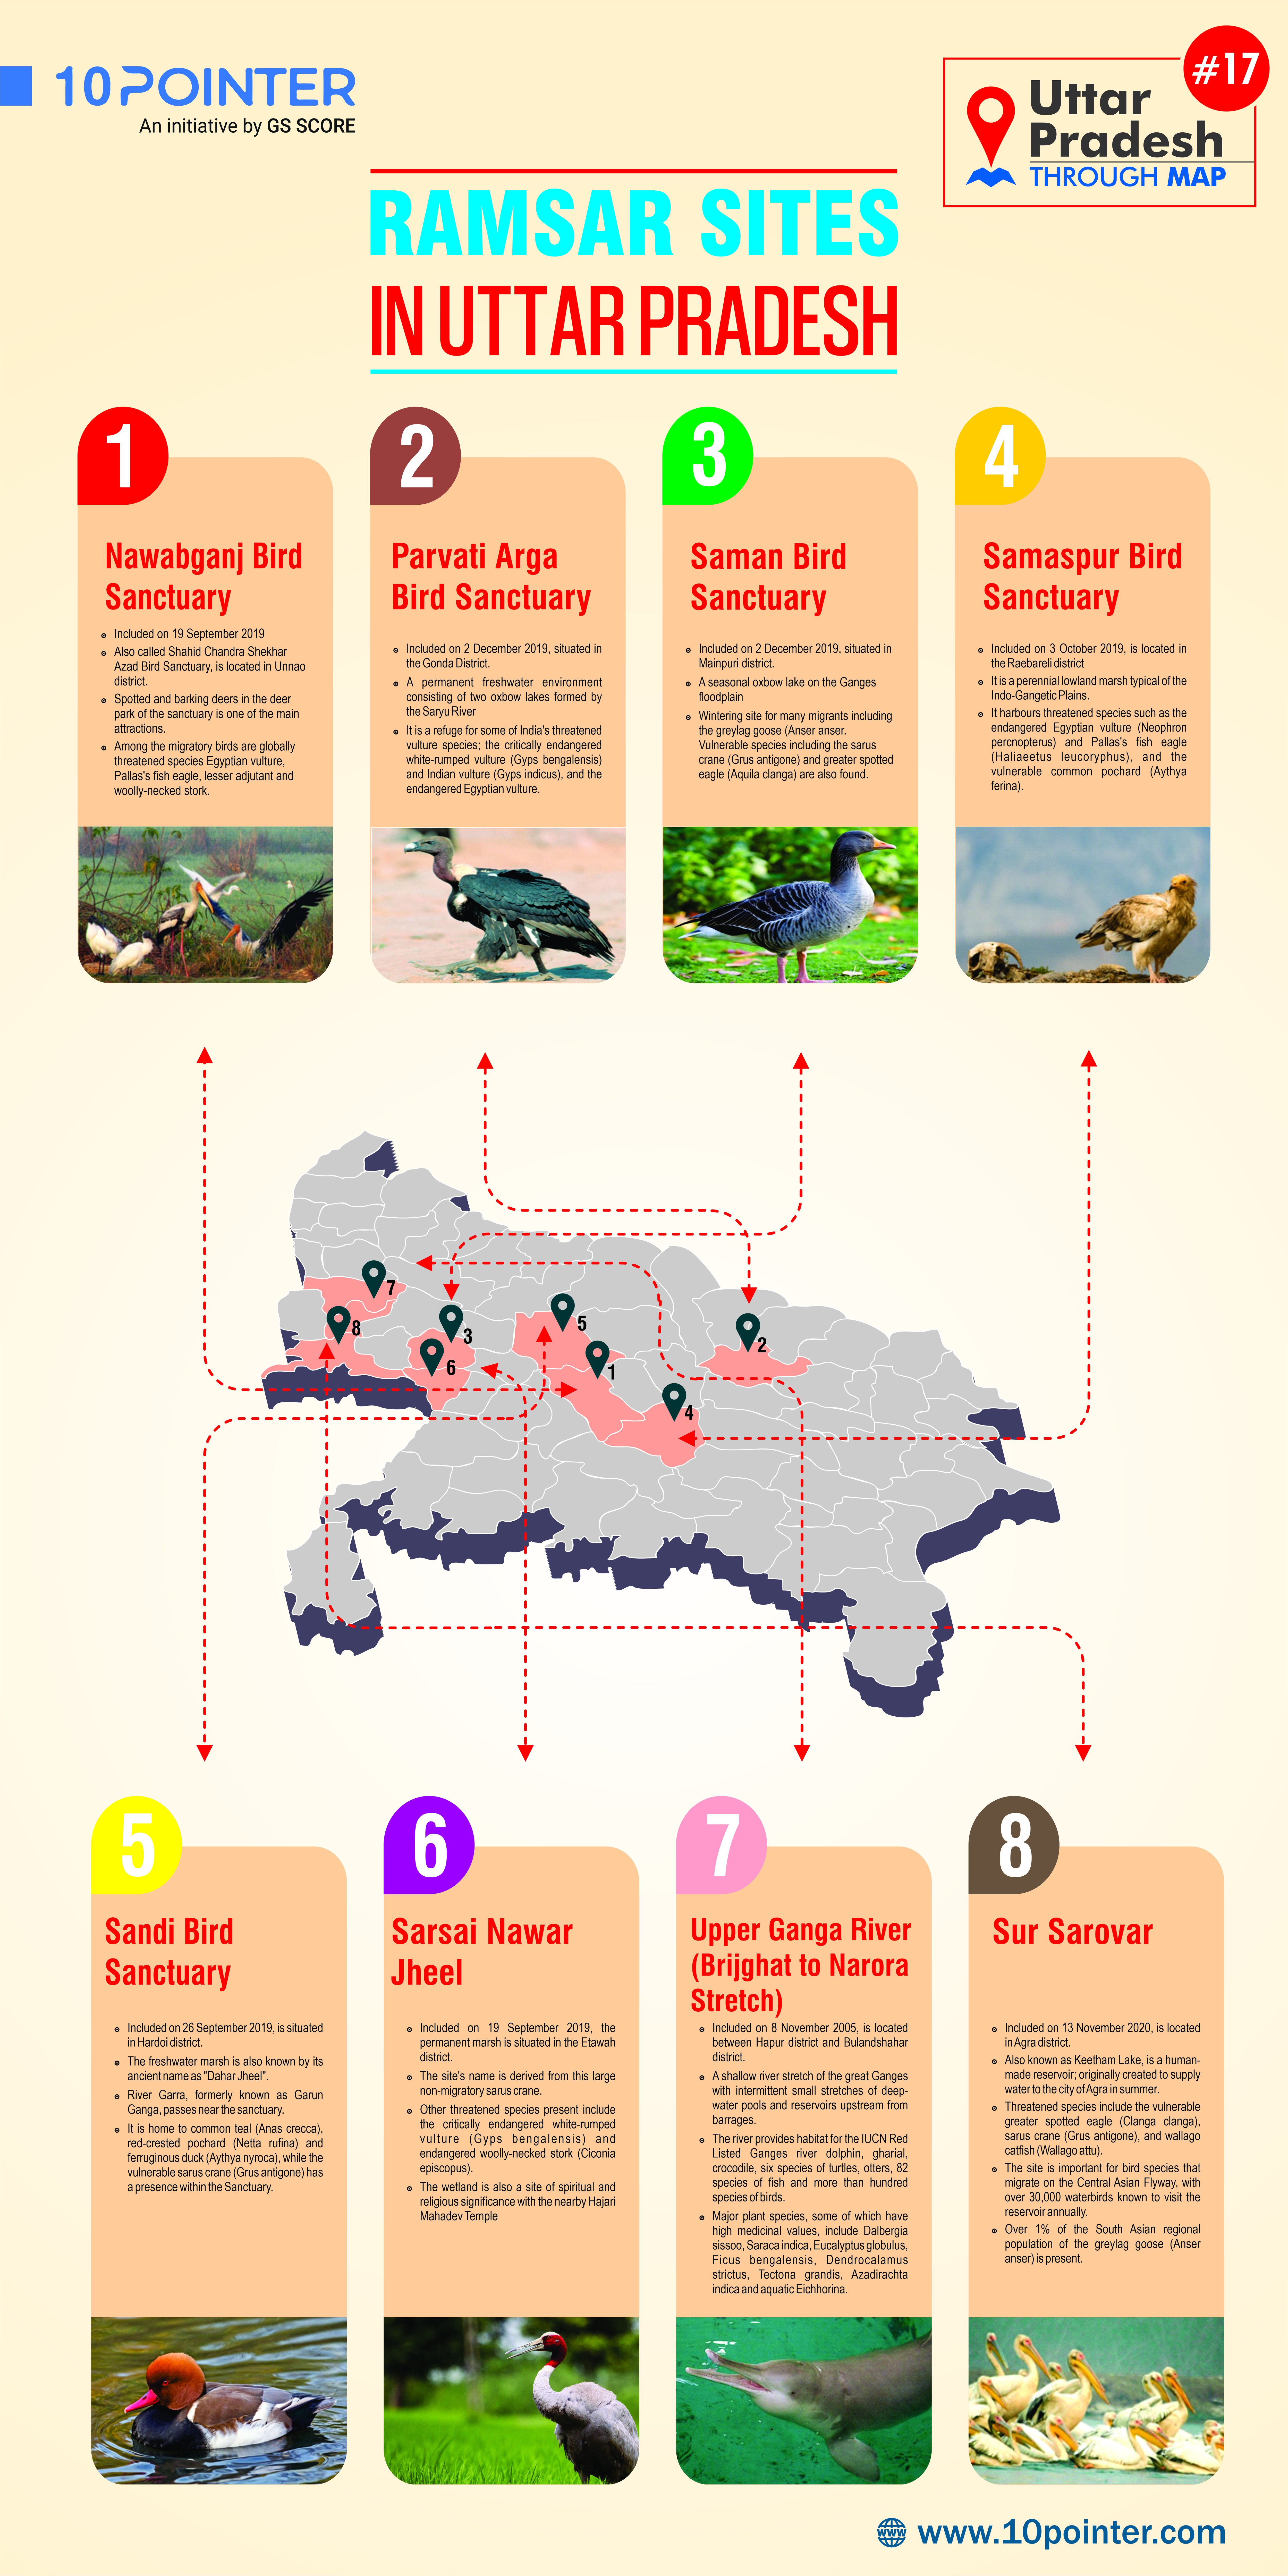 Ramsar Sites in Utter Pradesh